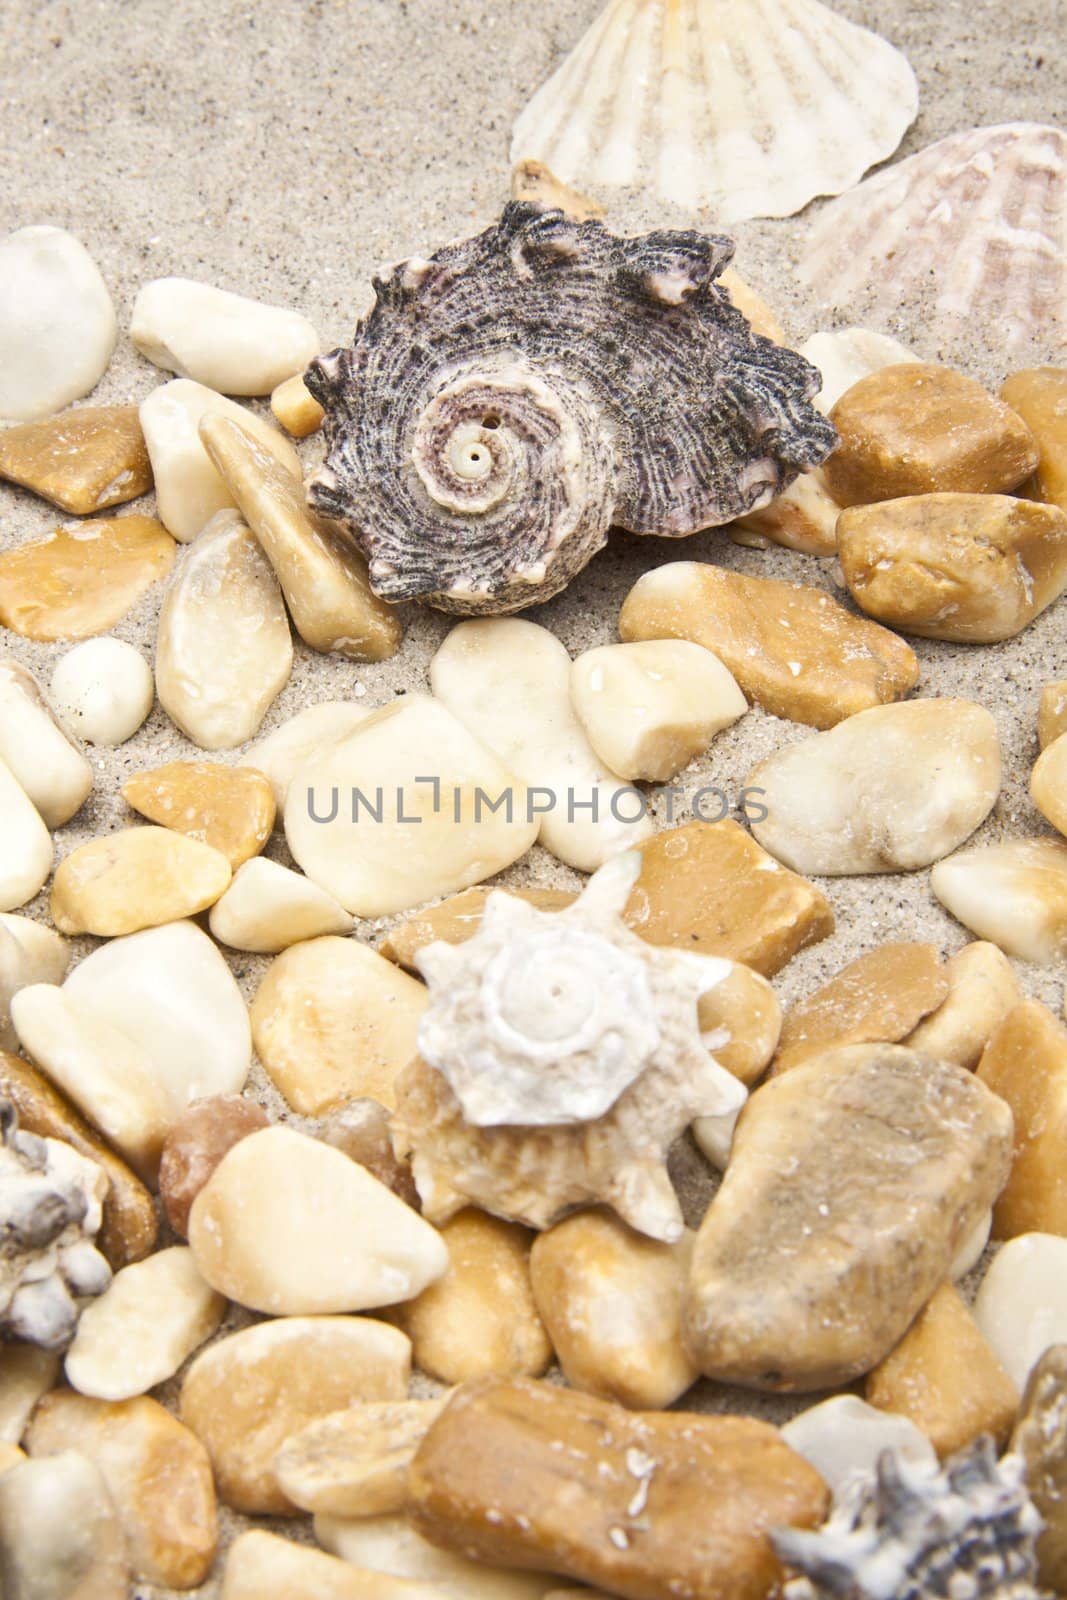 Sea shells and stones